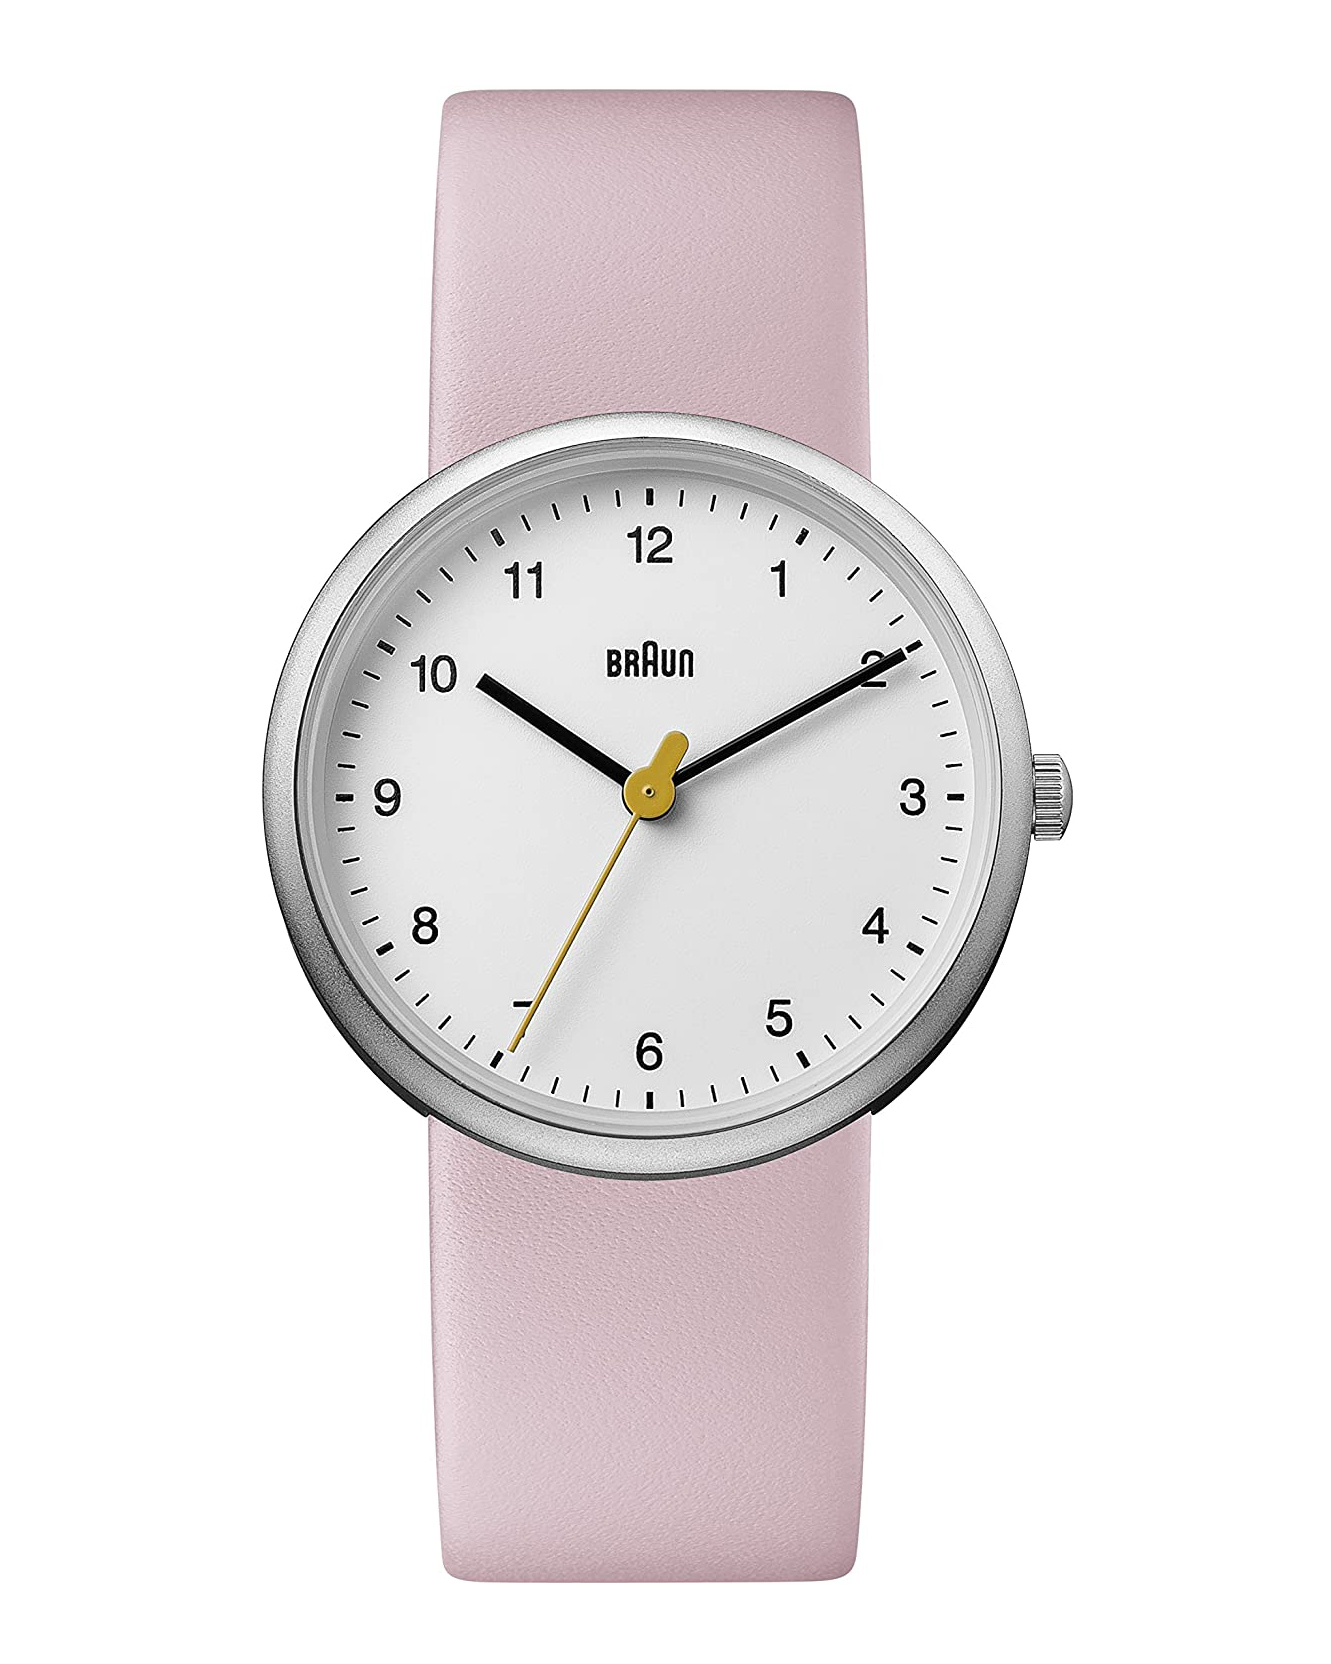 часы Braun BN0231 White Pink Lady фото 4